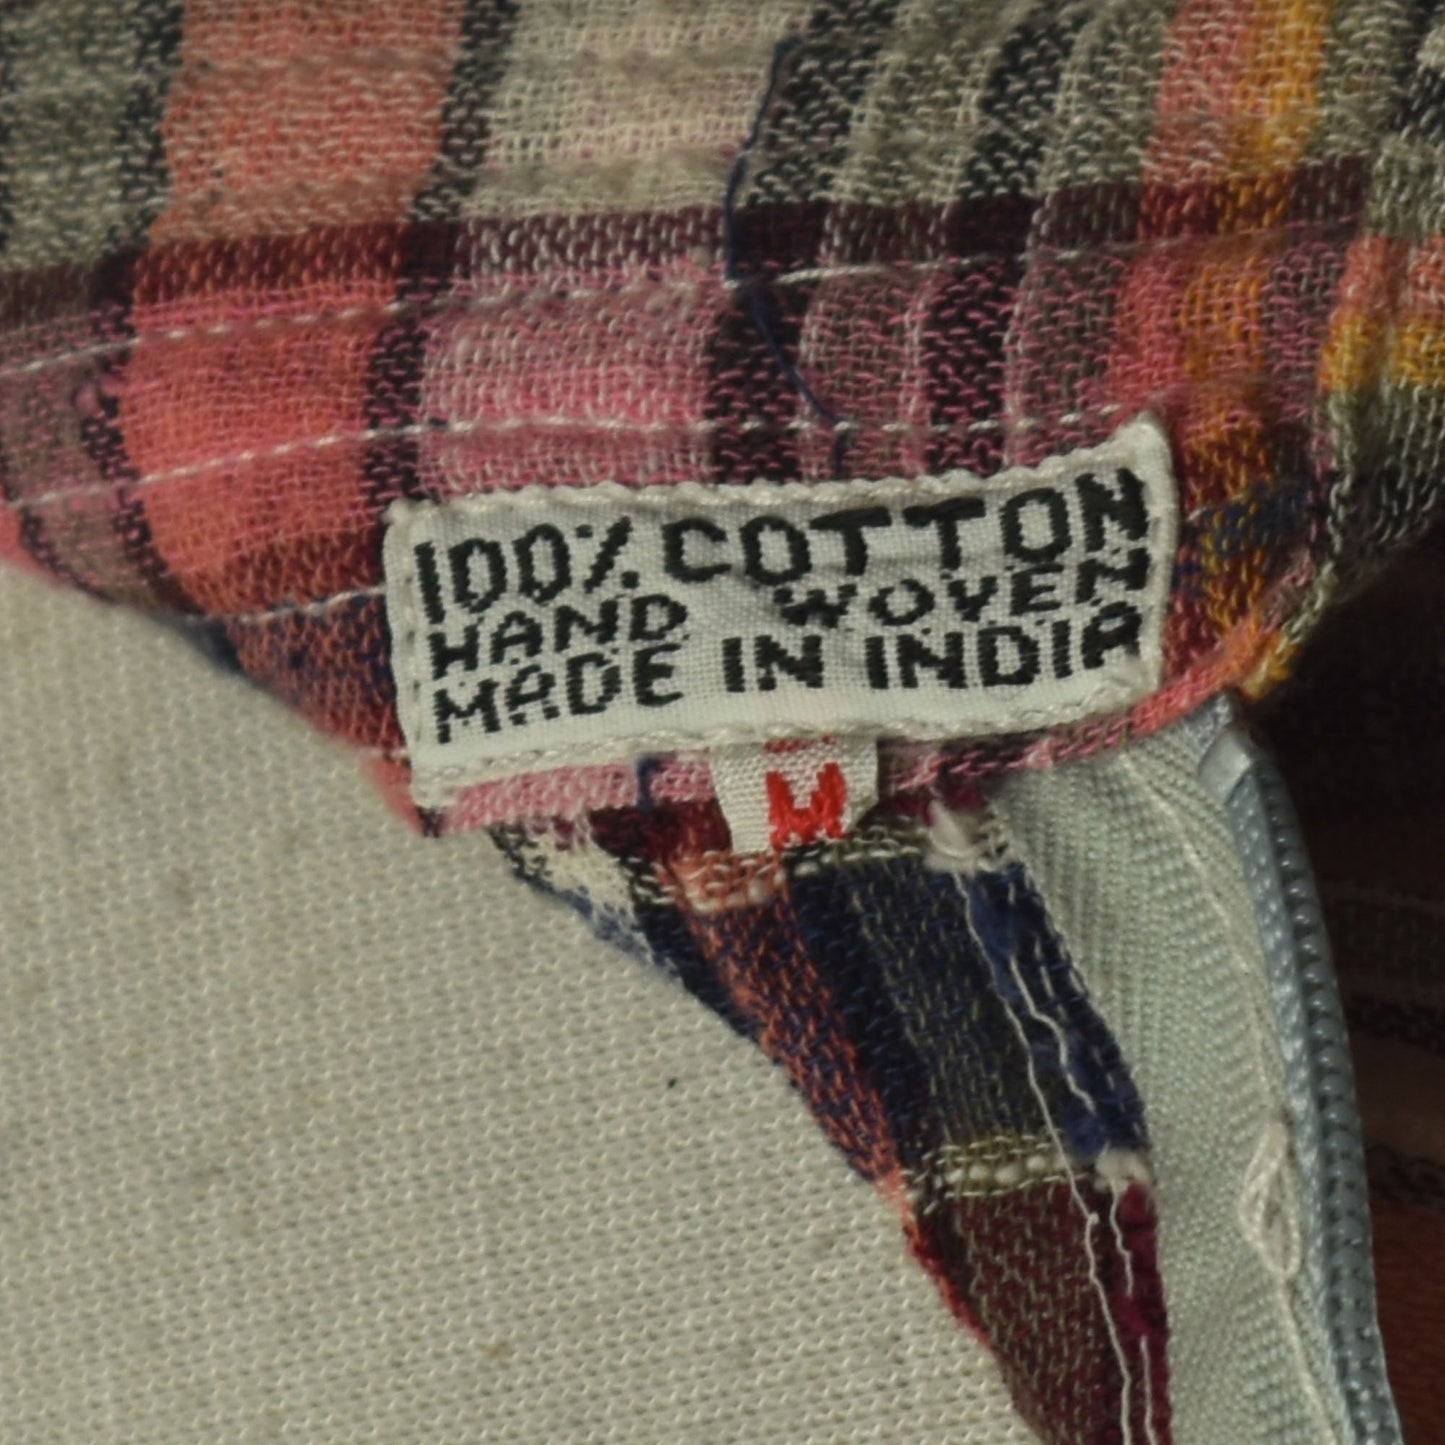 Vintage 70s Indian Cotton Gauze Skirt and Shirt Set